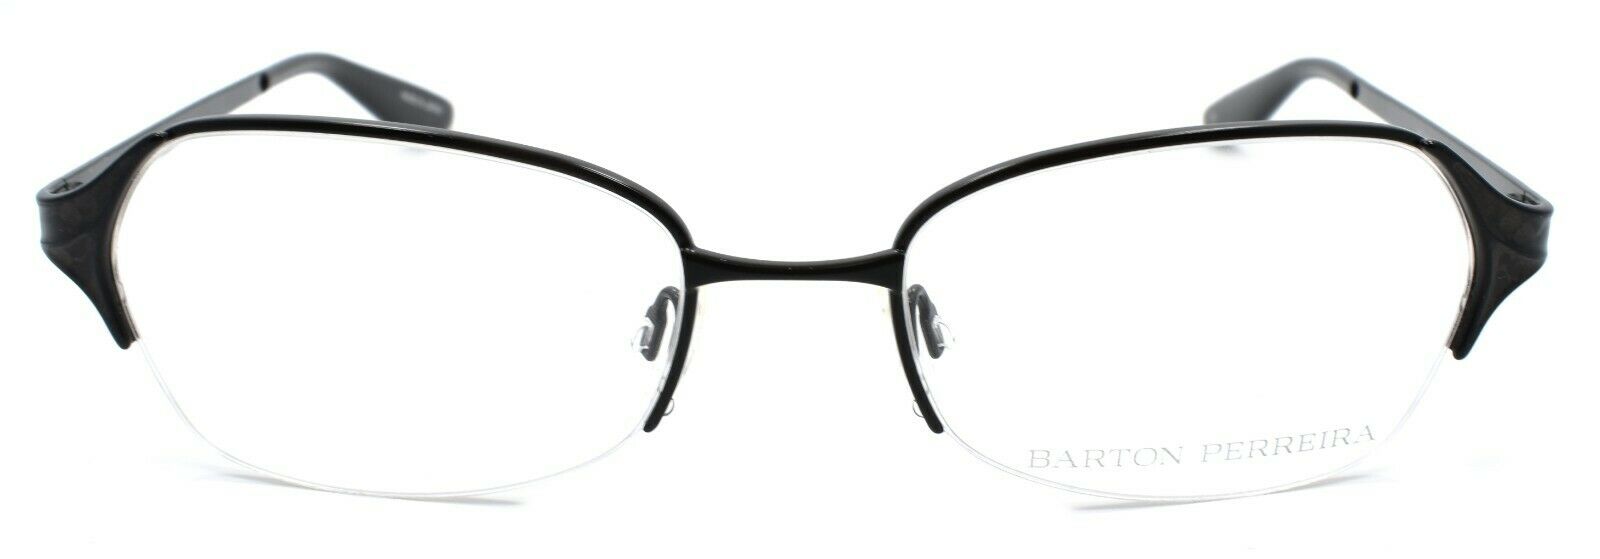 2-Barton Perreira Valera Women's Eyeglasses Half-rim 50-18-135 Black / Snake-672263039907-IKSpecs